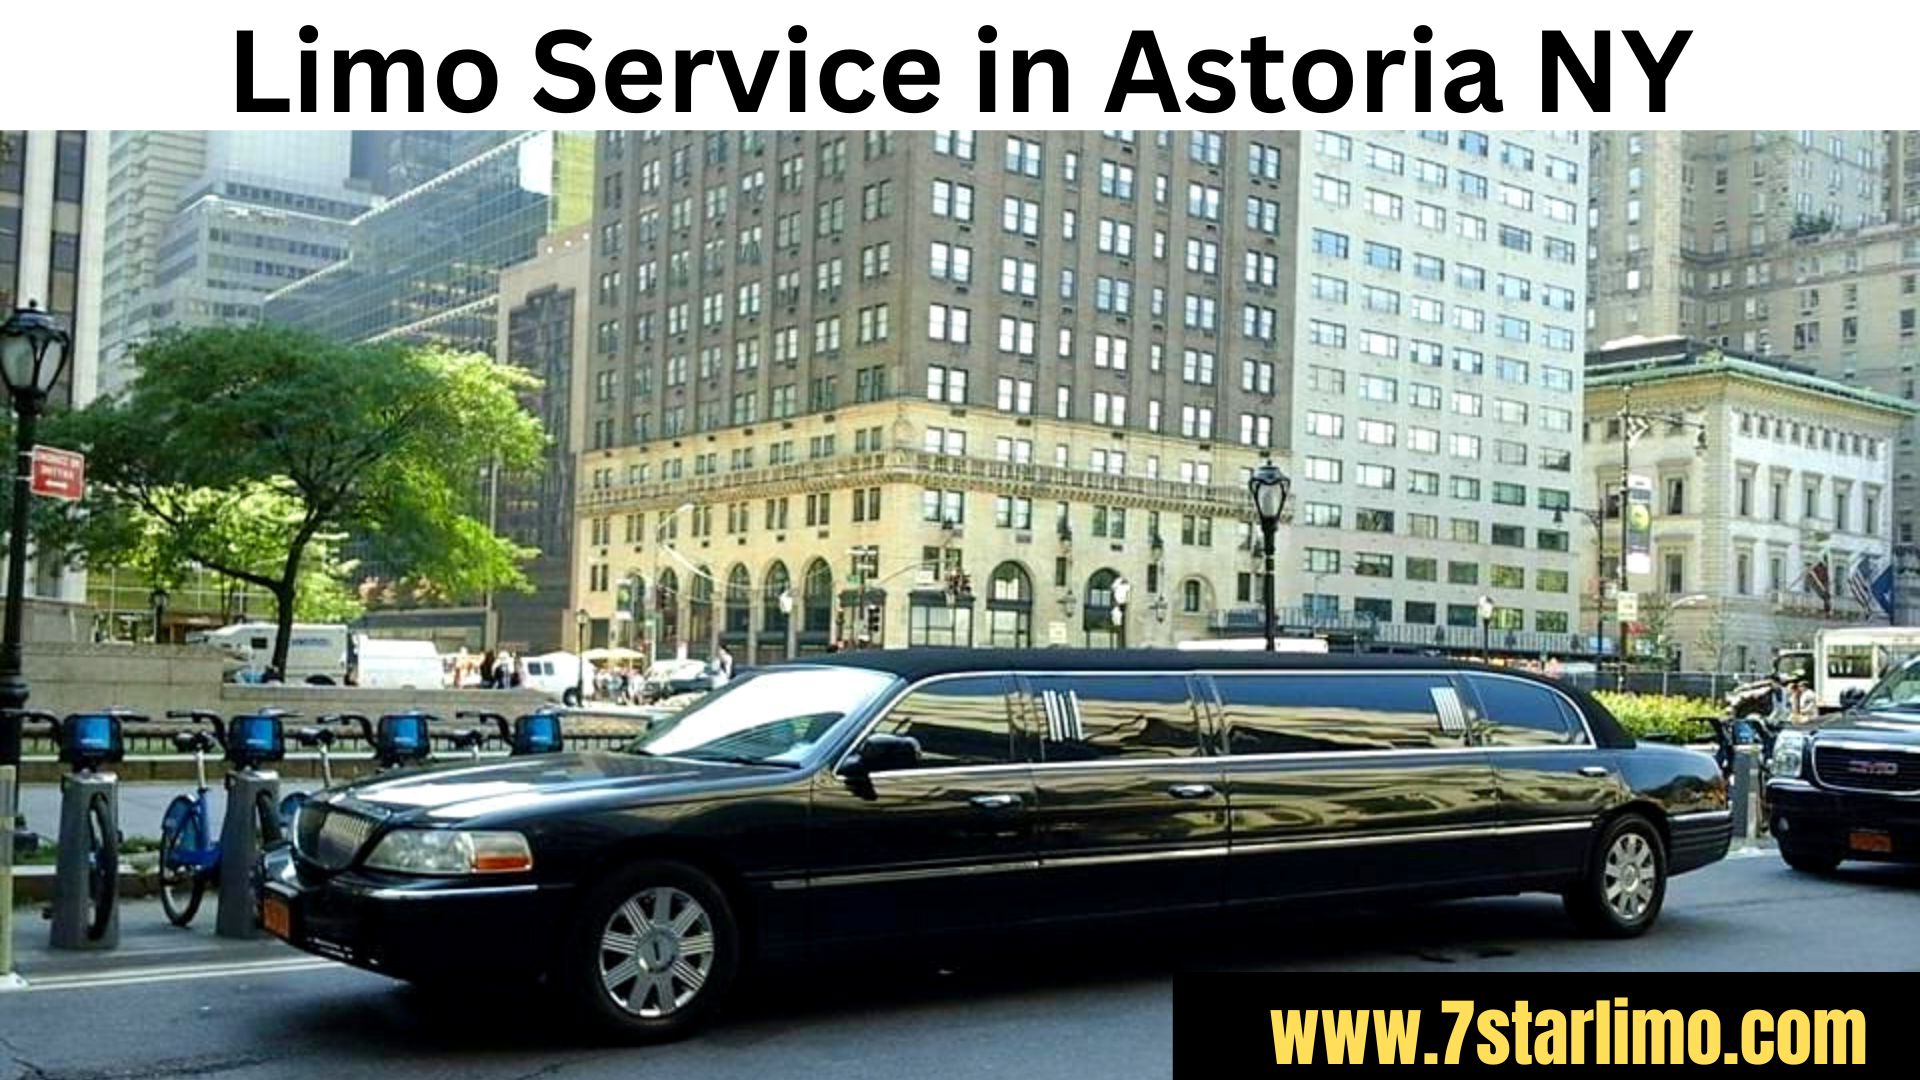 Limo Service in Astoria NY